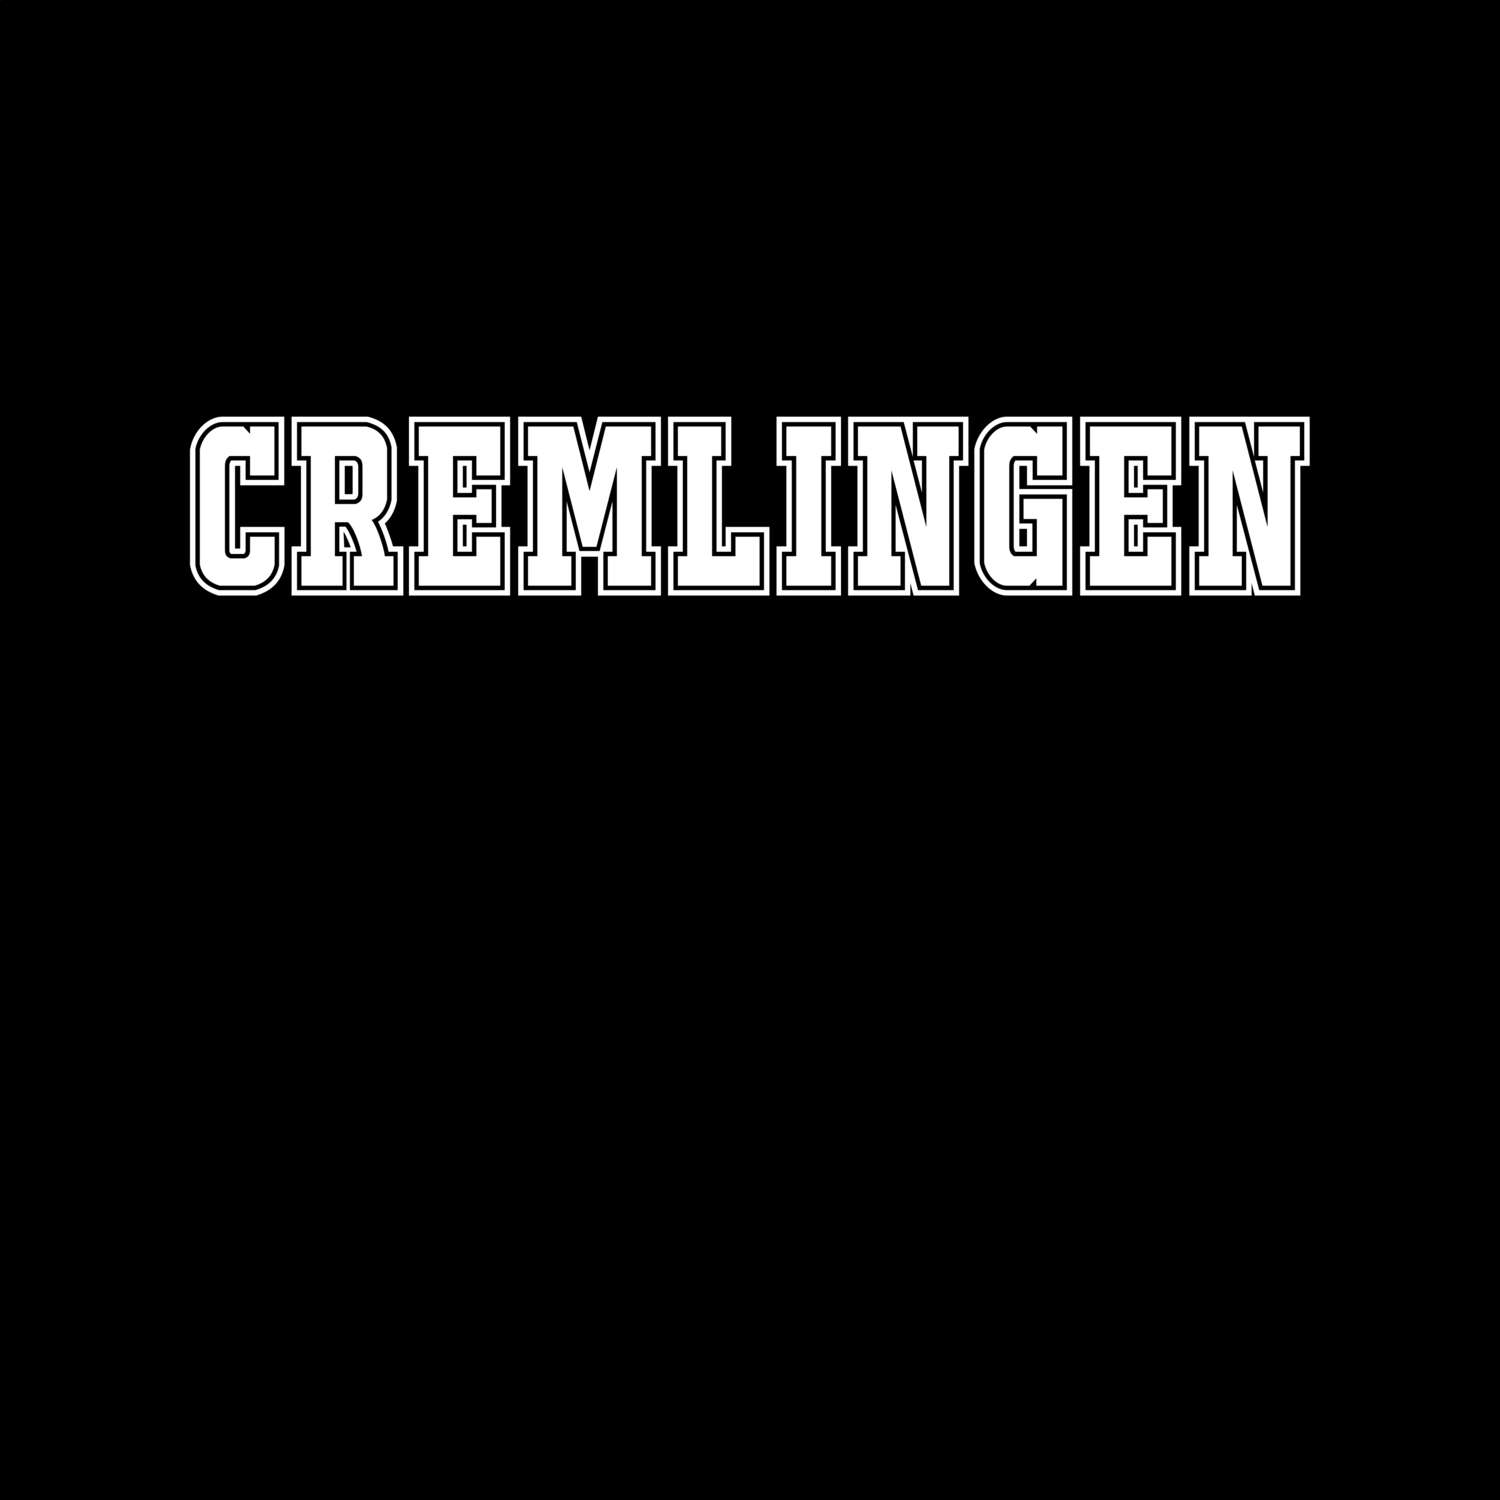 Cremlingen T-Shirt »Classic«